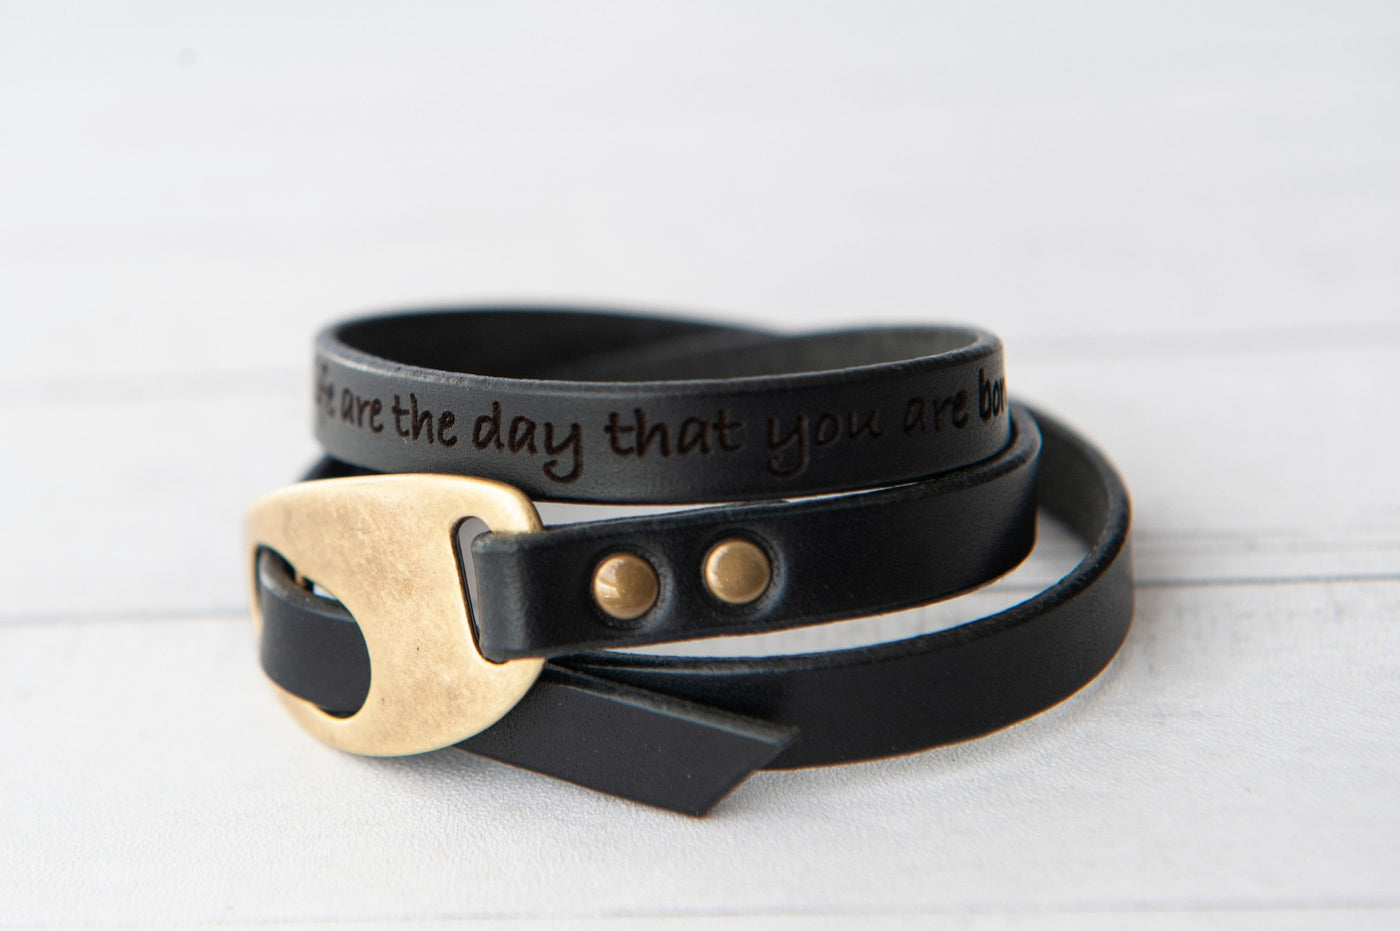 Personalized Leather Wrap Bracelet - Handmade Gift for Her - Boho Style Chic - Customizable Men's Bracelet